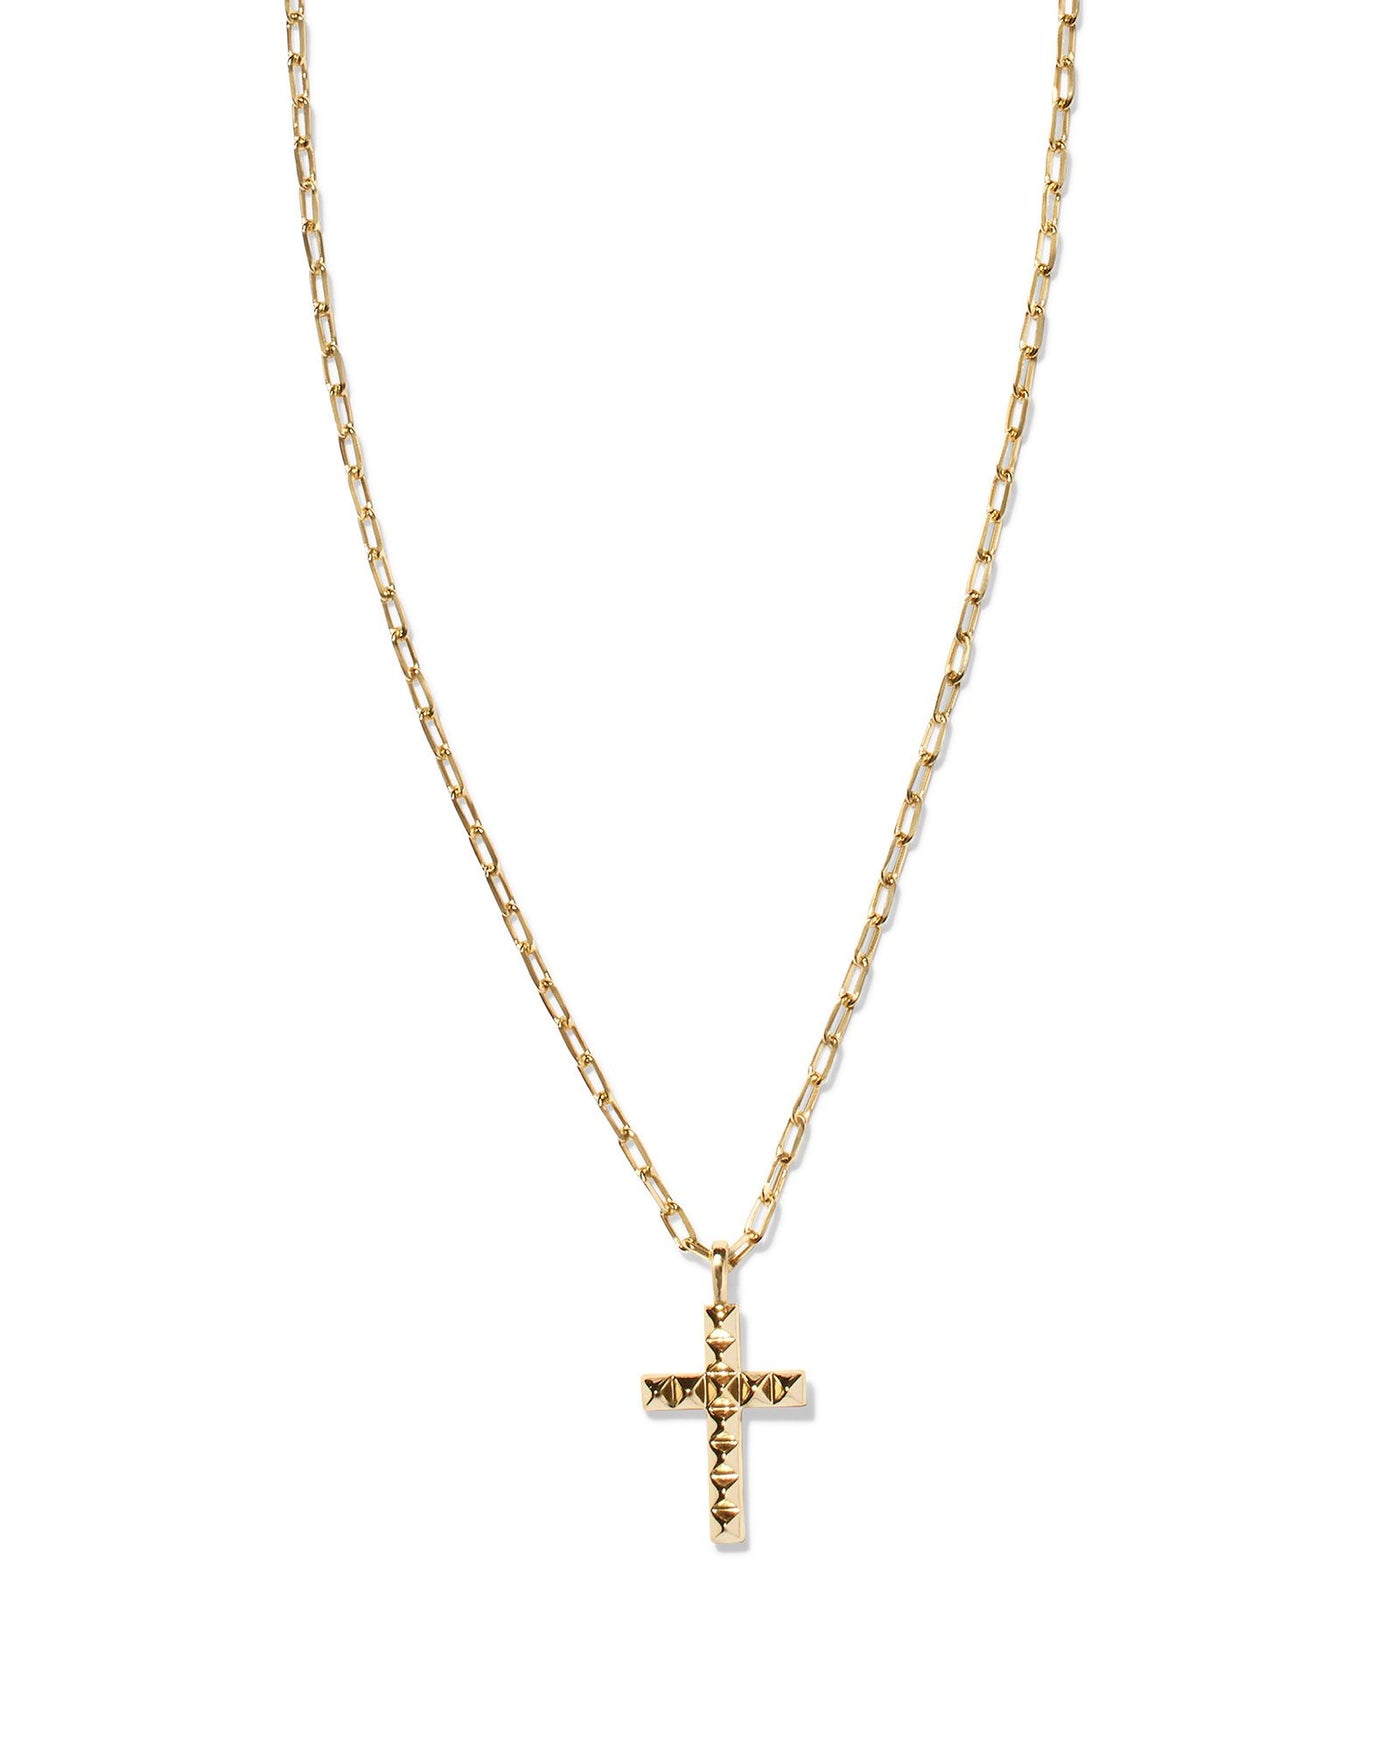 Kendra Scott Jada Cross Pendant Necklace in Gold on white background closeup.